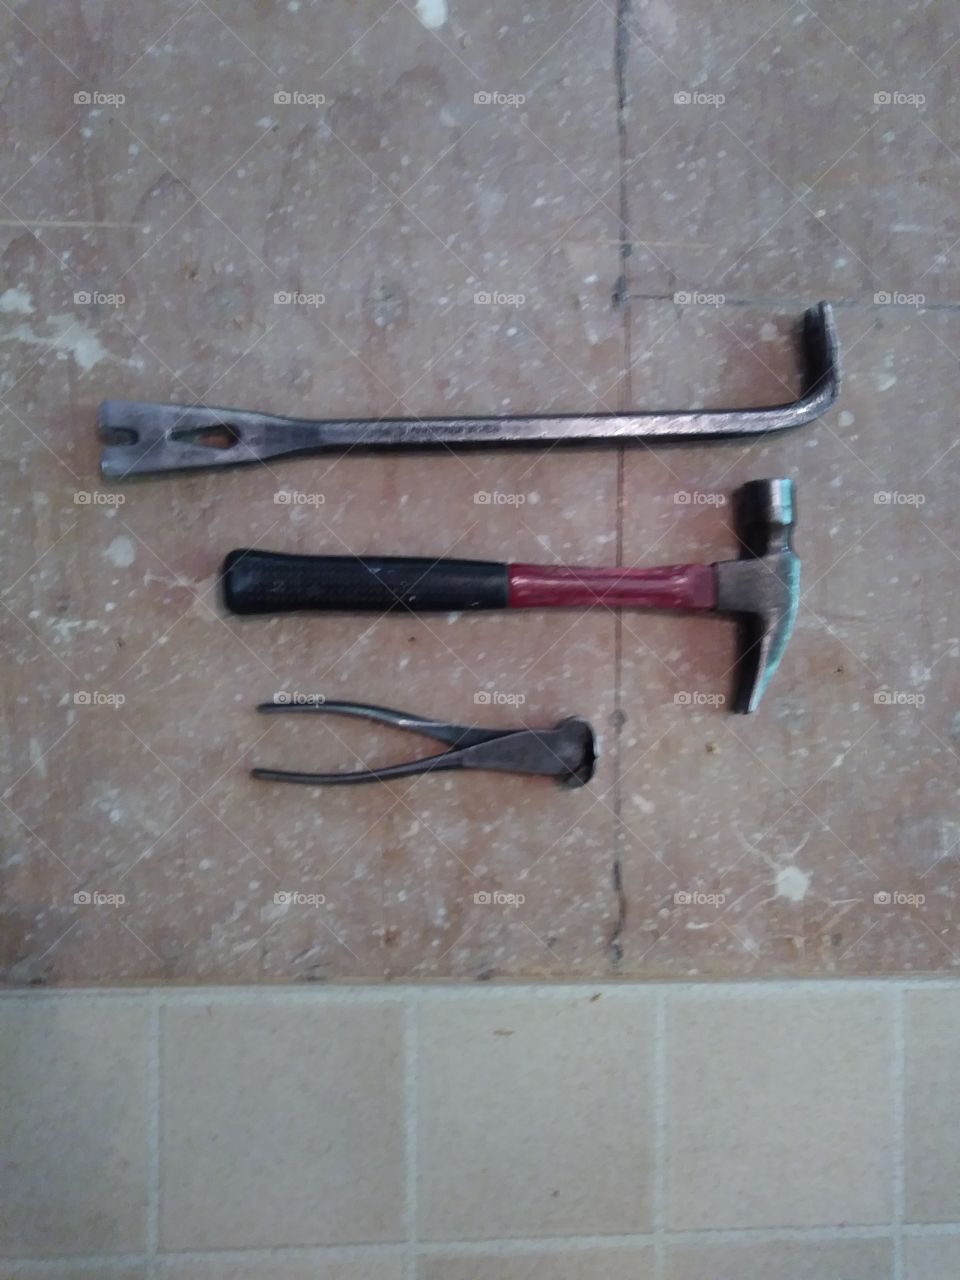 tools on the floor